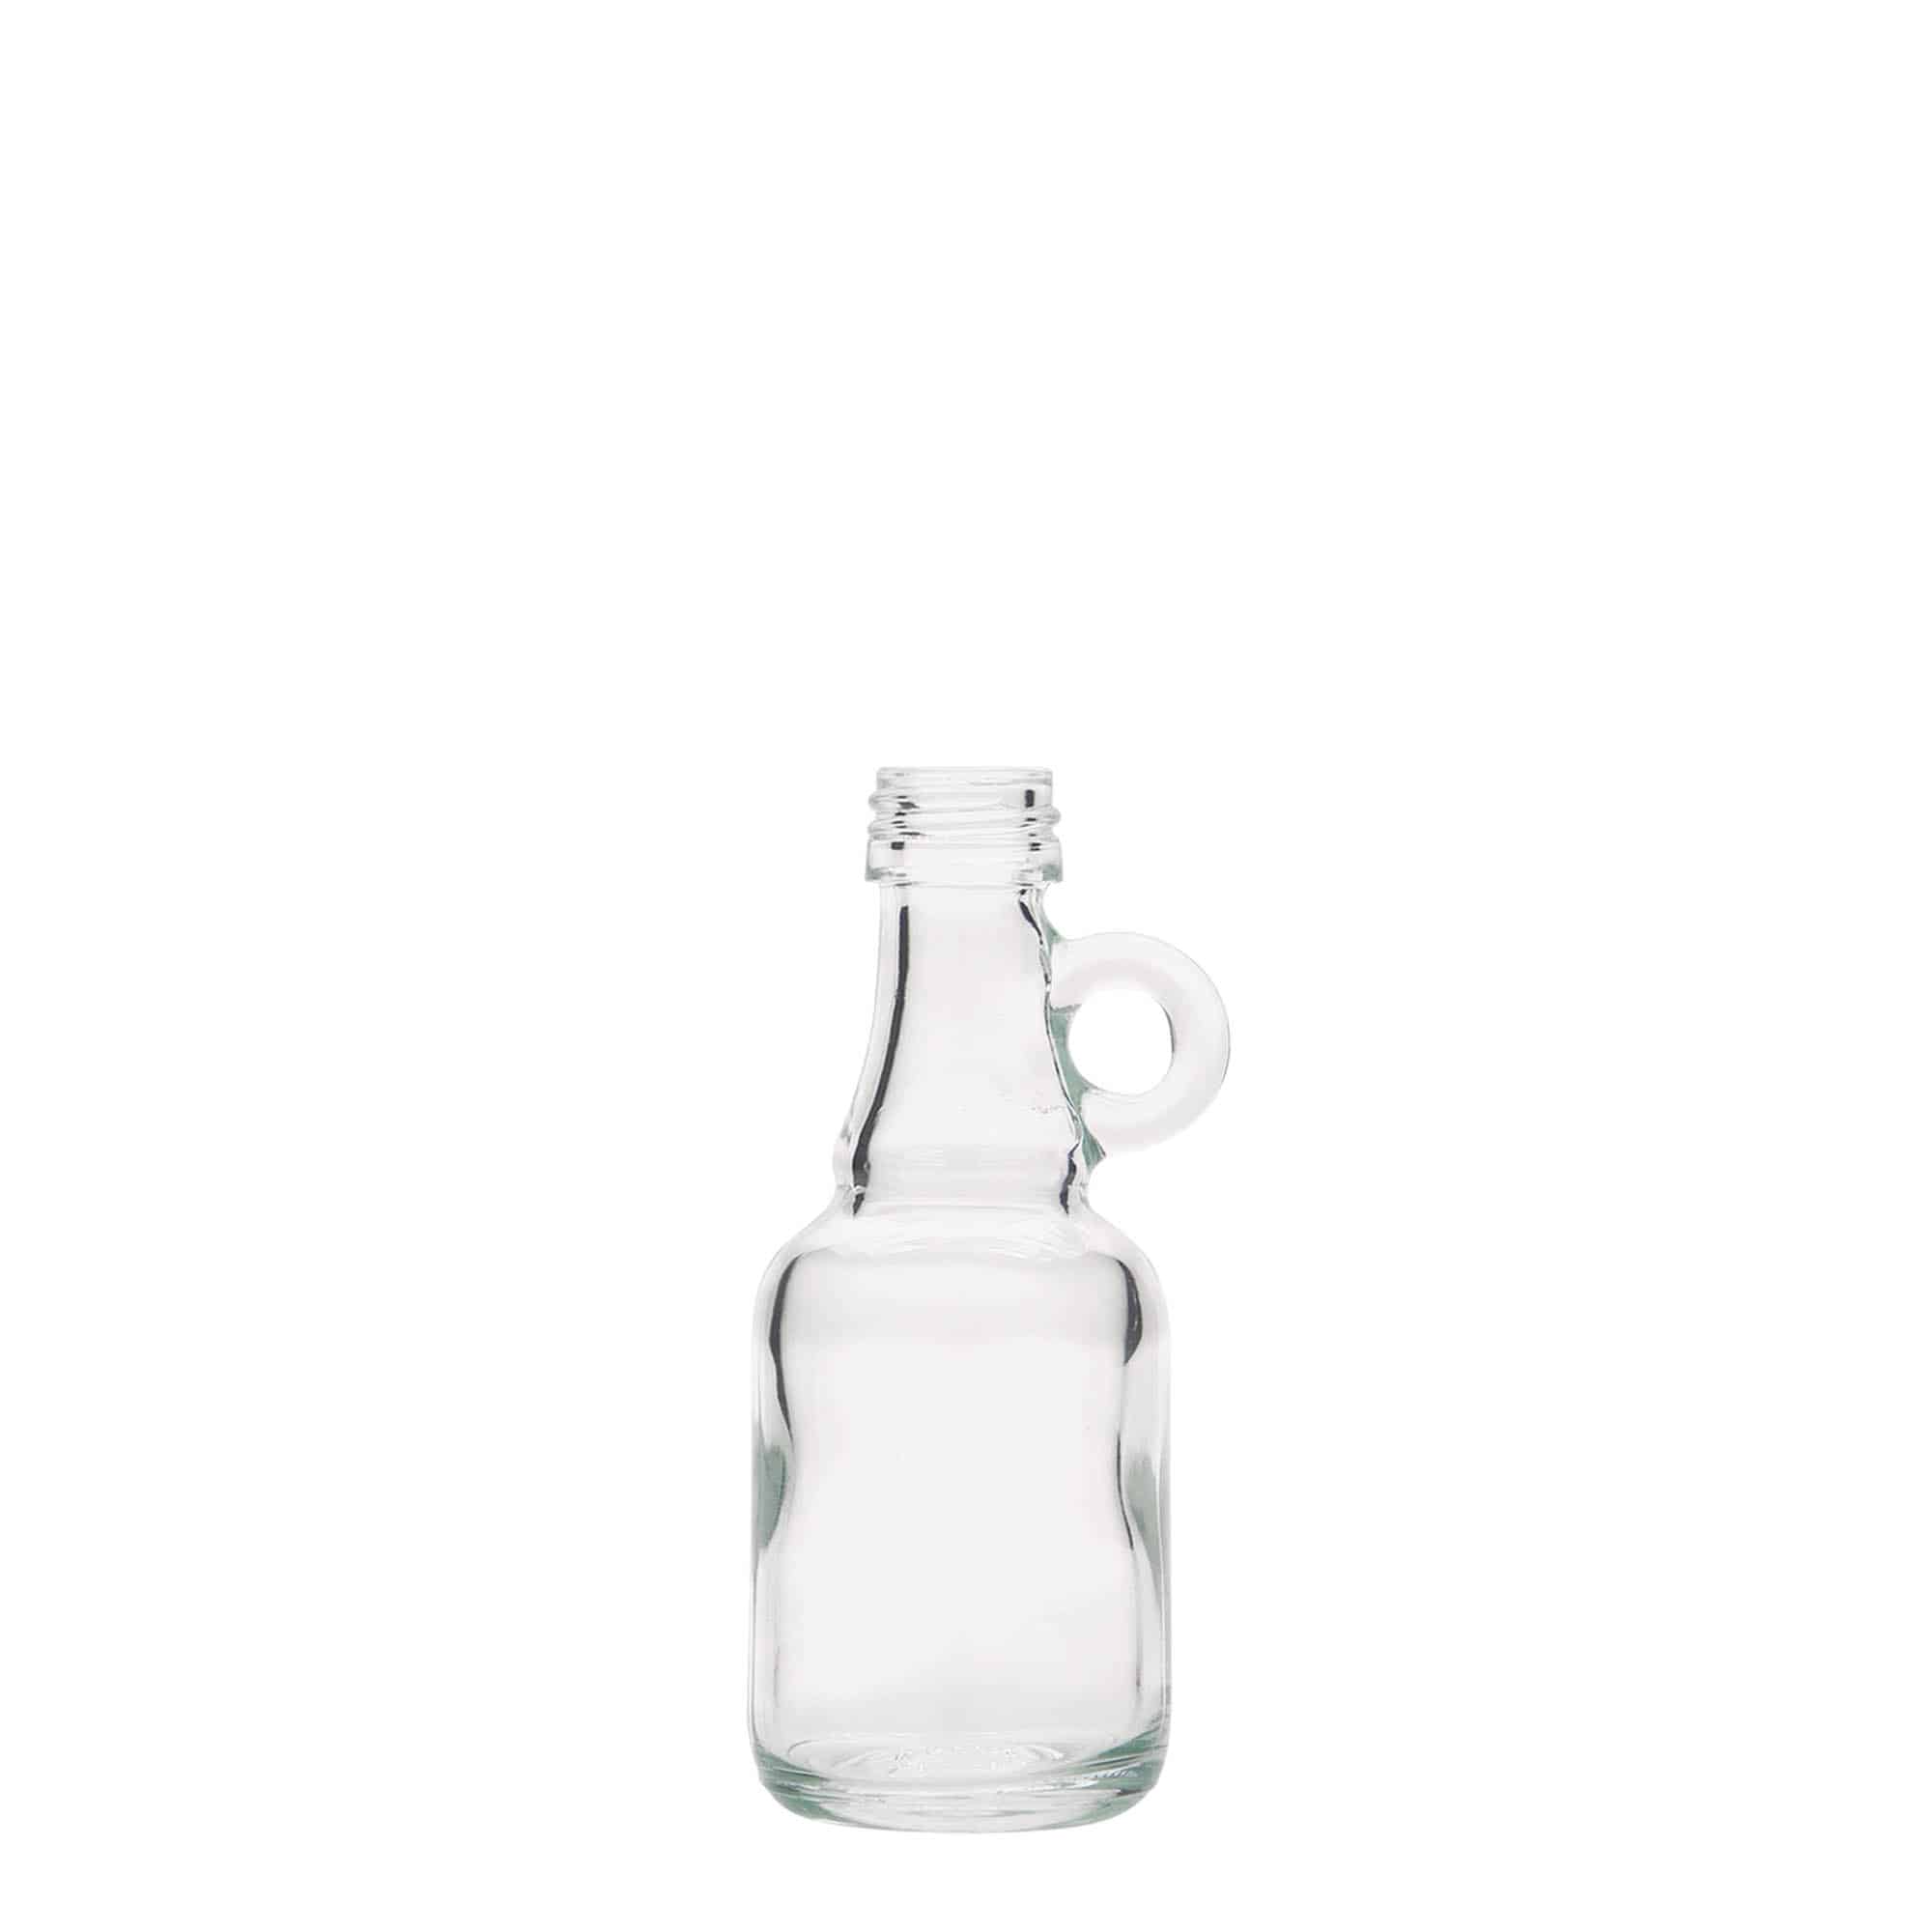 40 ml glass bottle 'Santos', closure: PP 18